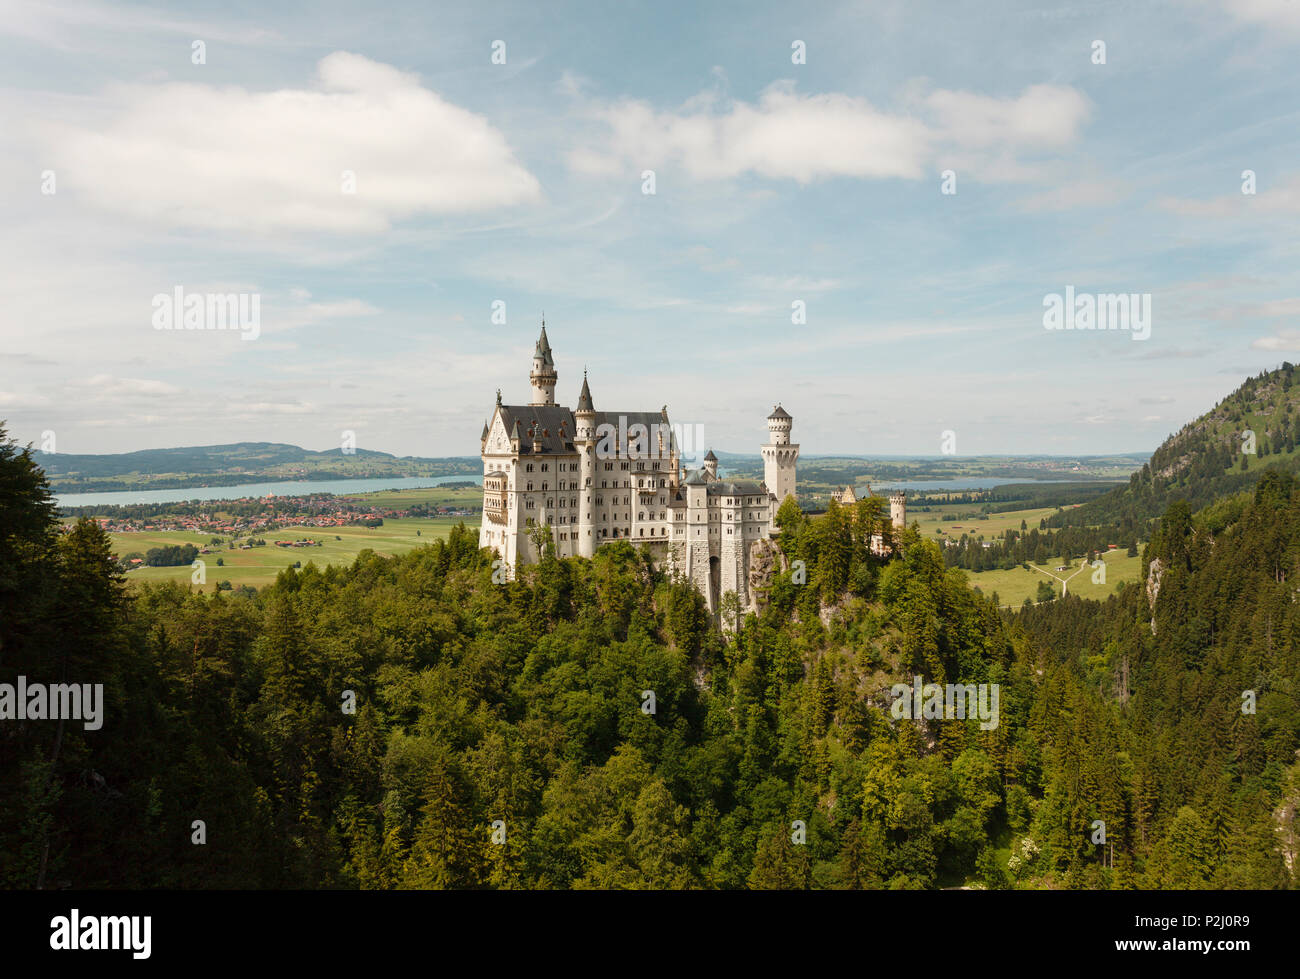 El castillo de Neuschwanstein, del siglo XIX, el castillo real de rey Ludwig II., Hohenschwangau, cerca de Fuessen, Ostallgaeu, Allgaeu, Baviera Foto de stock